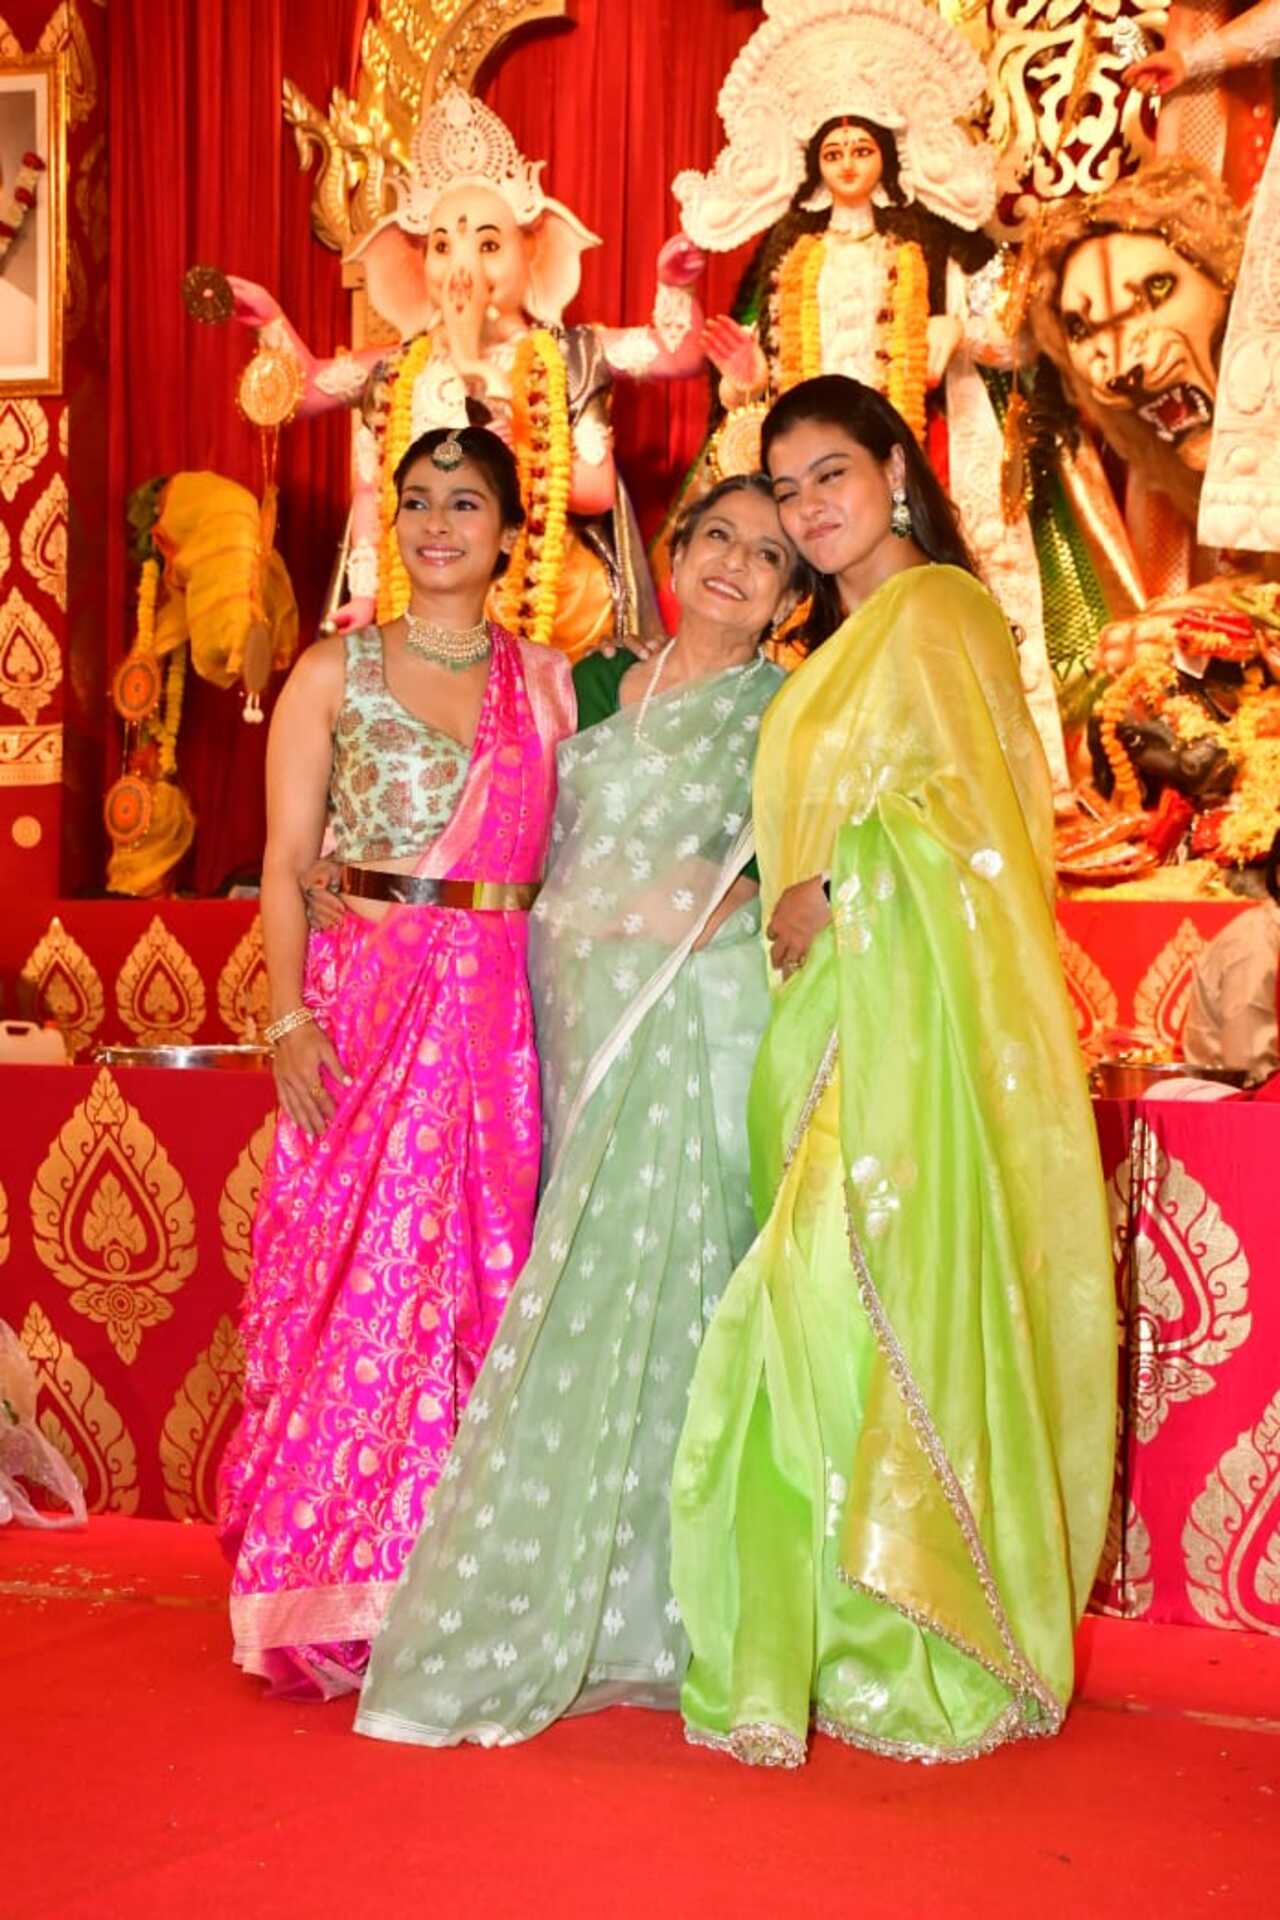 The Mukerji women looked stunning in sarees